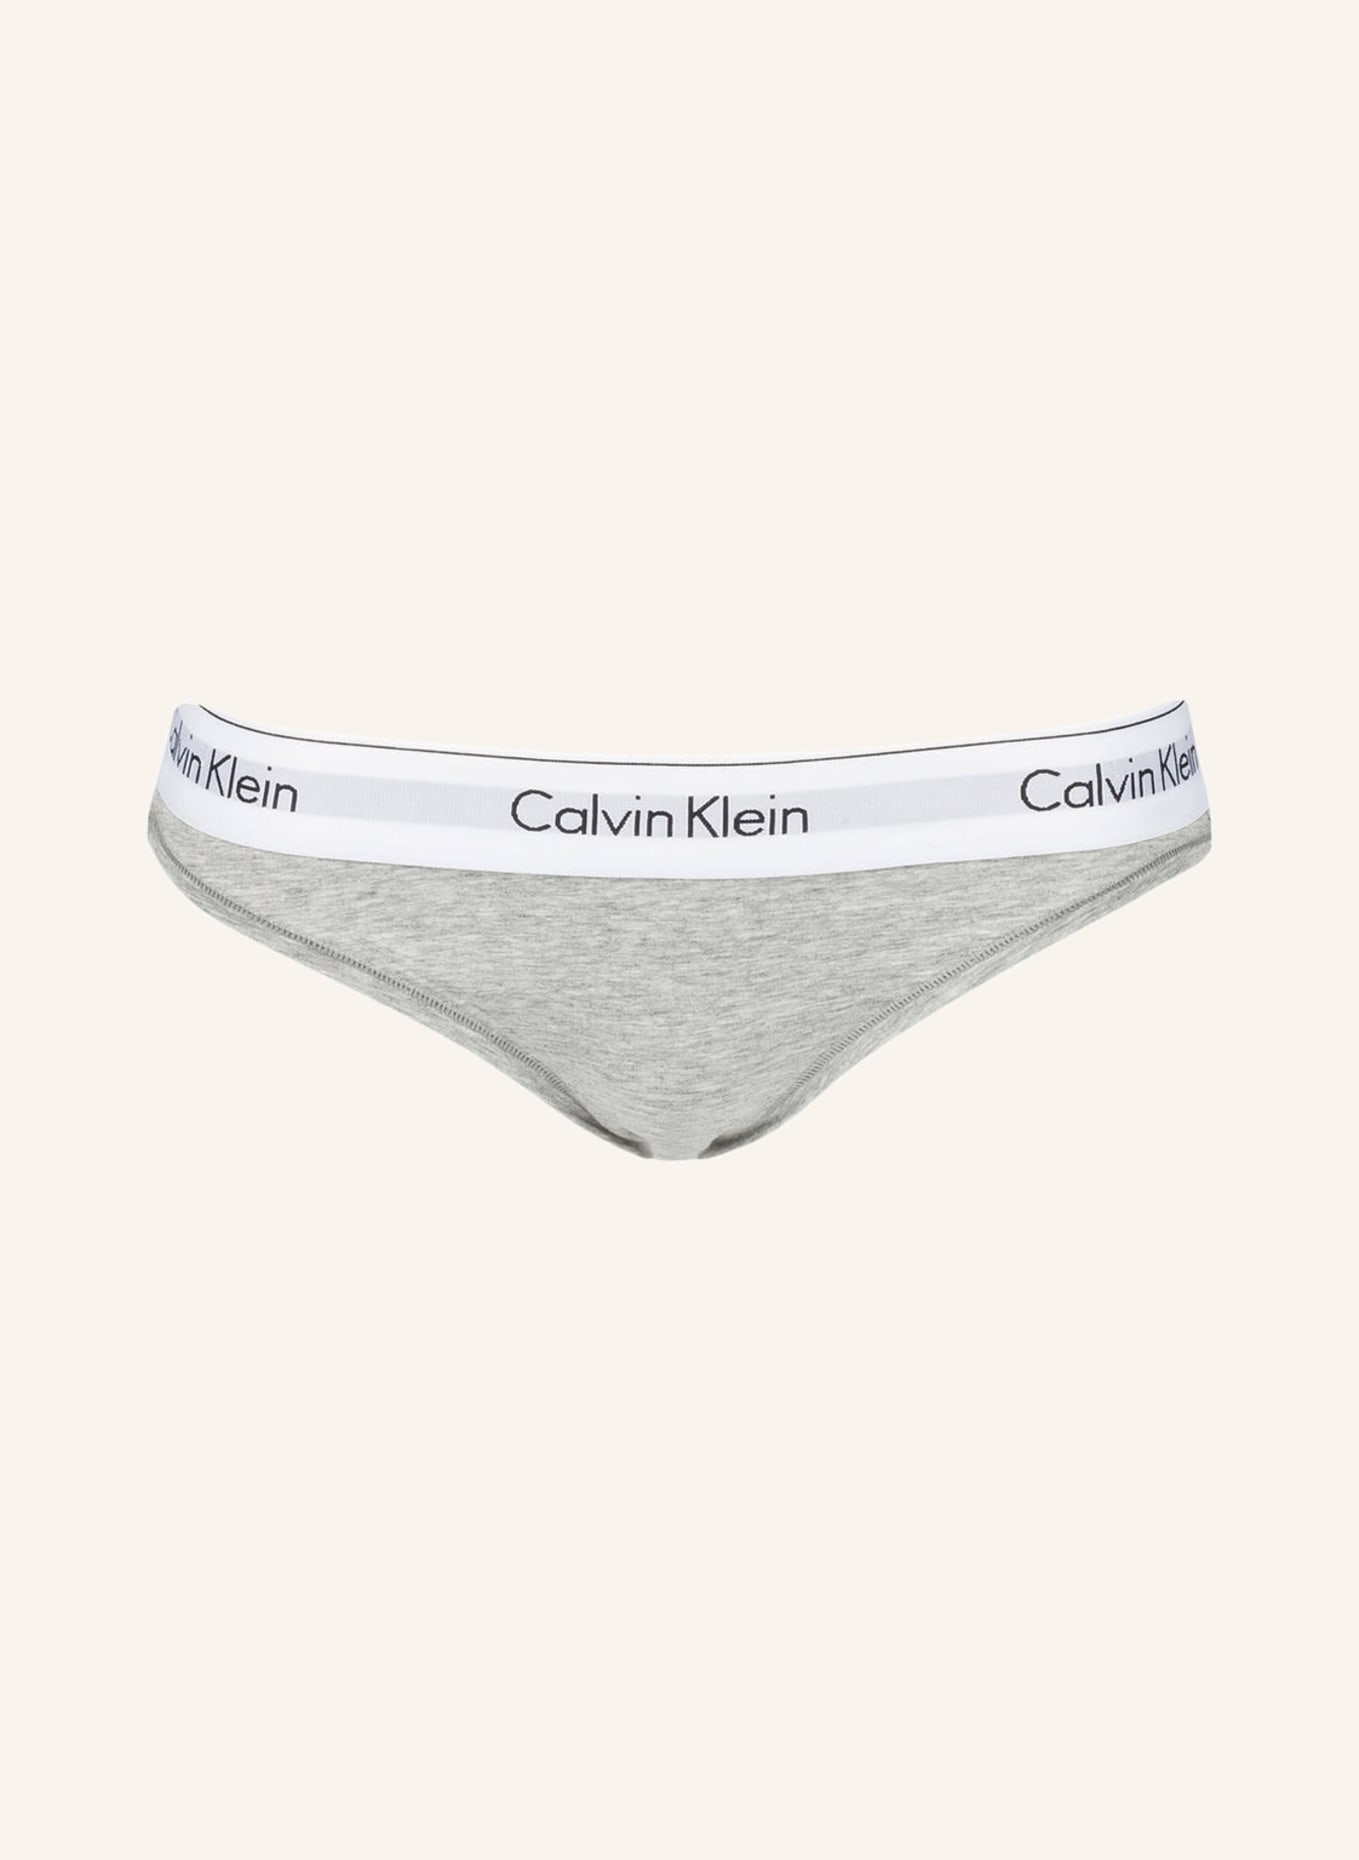 Calvin Klein Brief MODERN COTTON, Color: GRAY MARLE (Image 1)